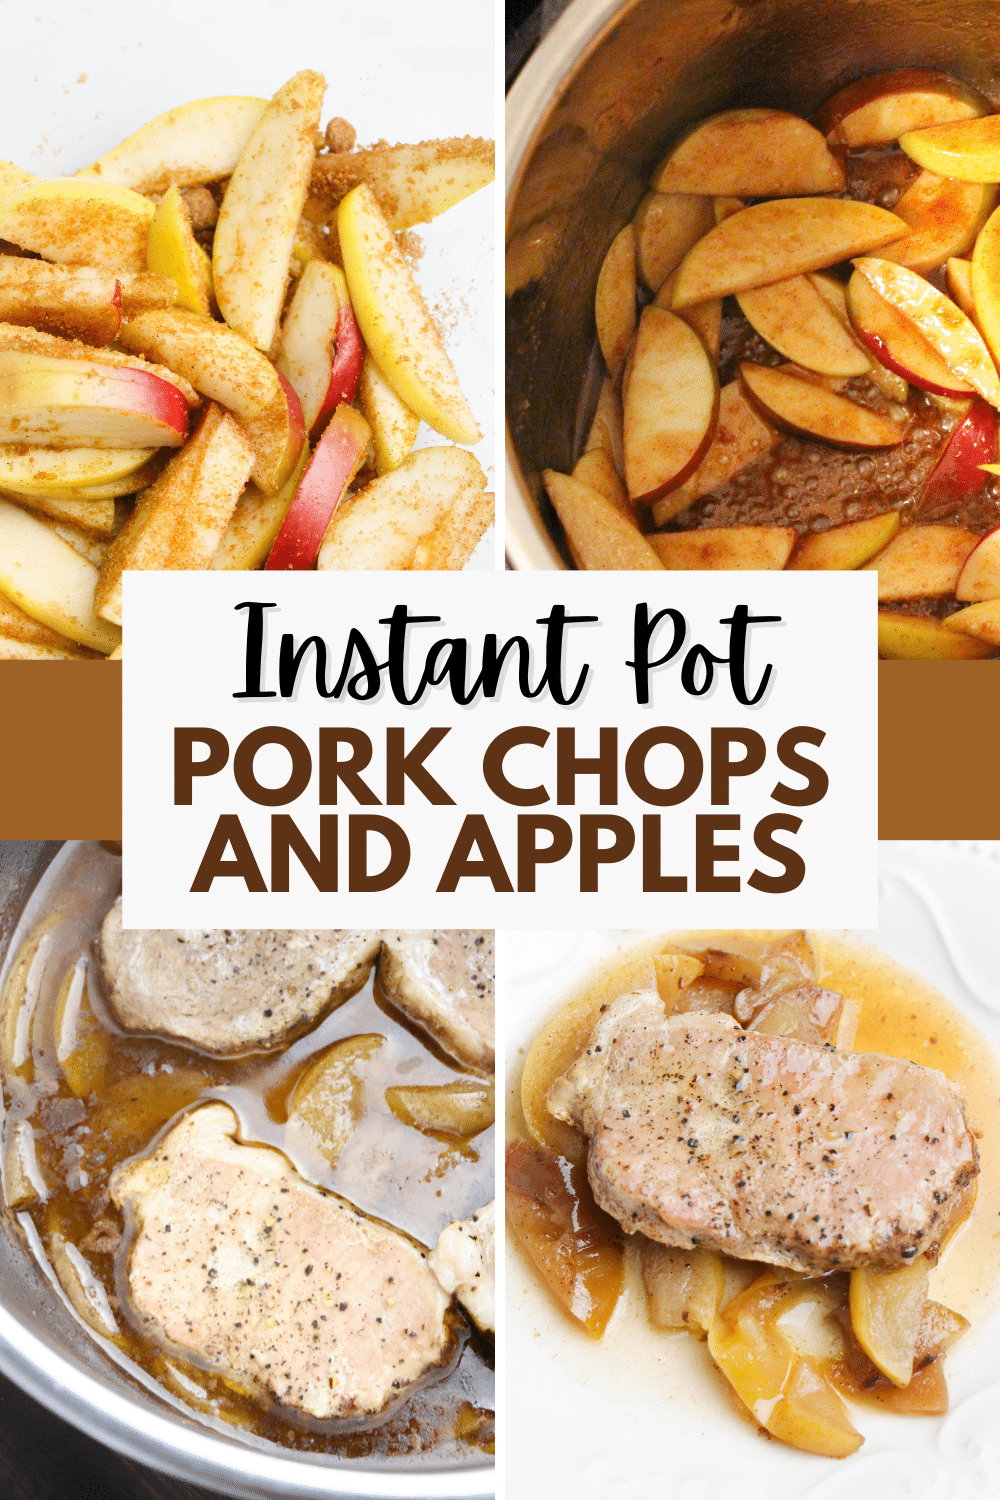 Instant pot pork chops with apples.